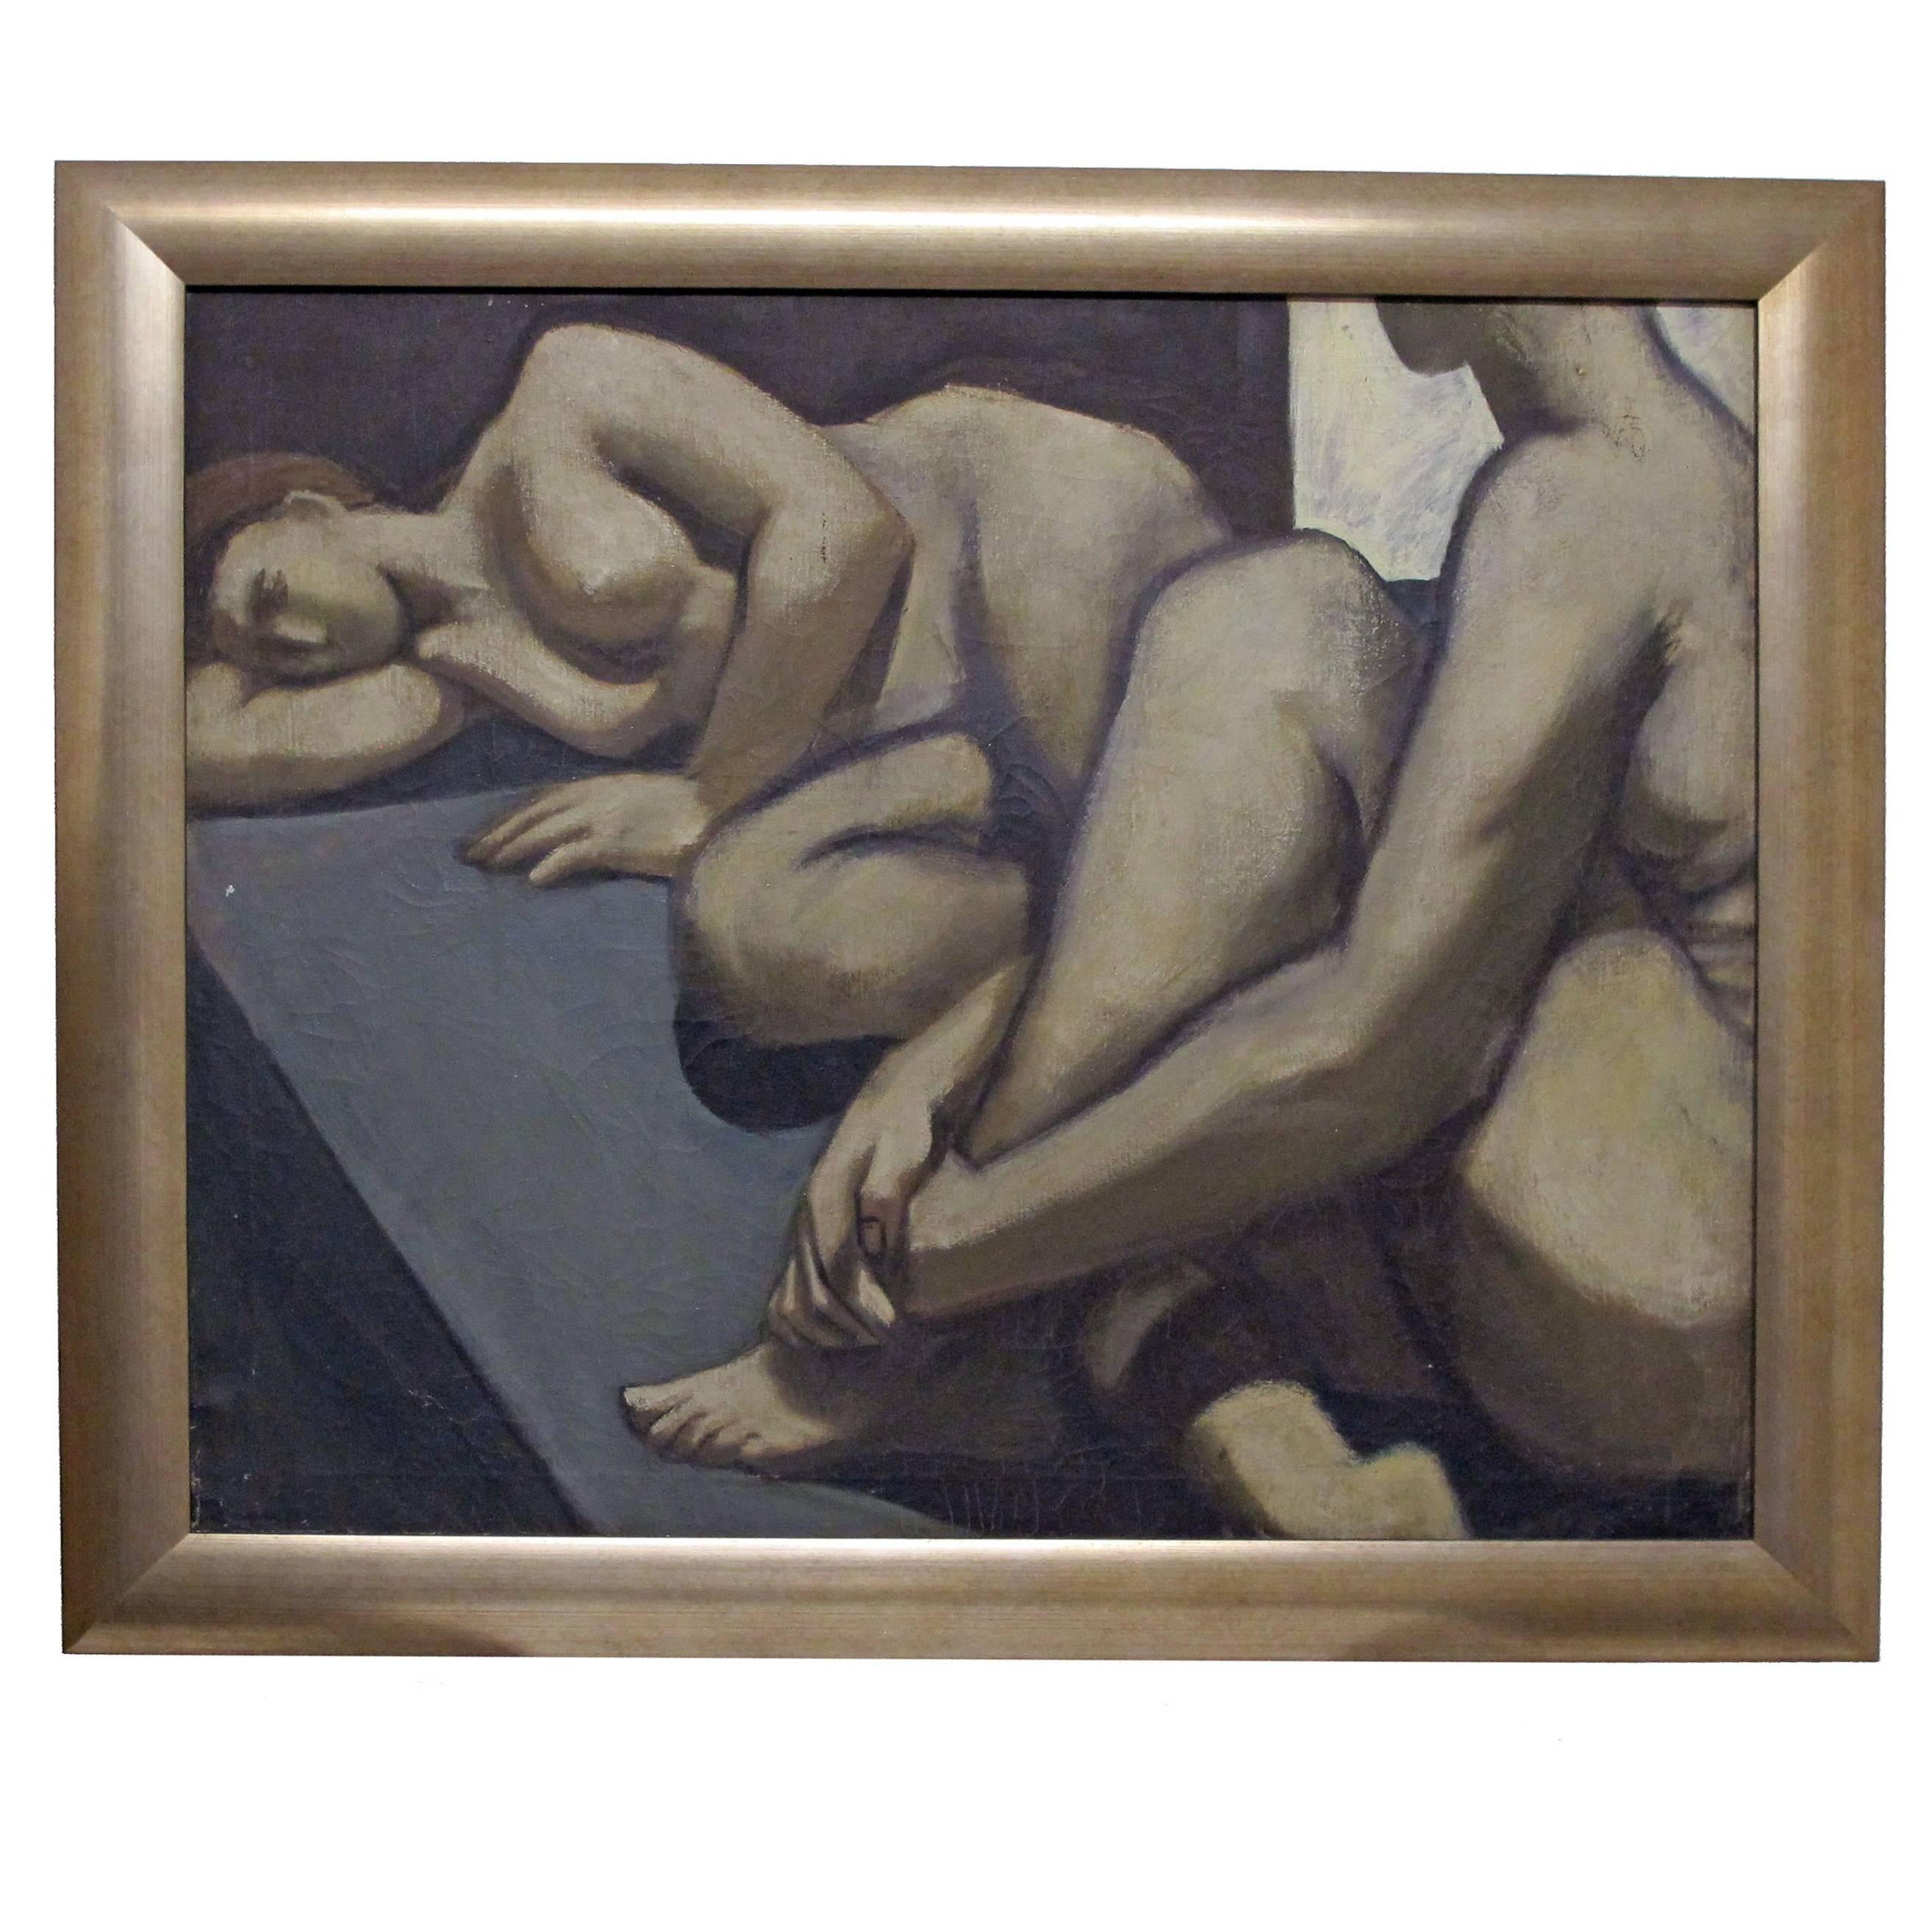 Gran desnudo de David Ladin, estadounidense, mediados del siglo XX